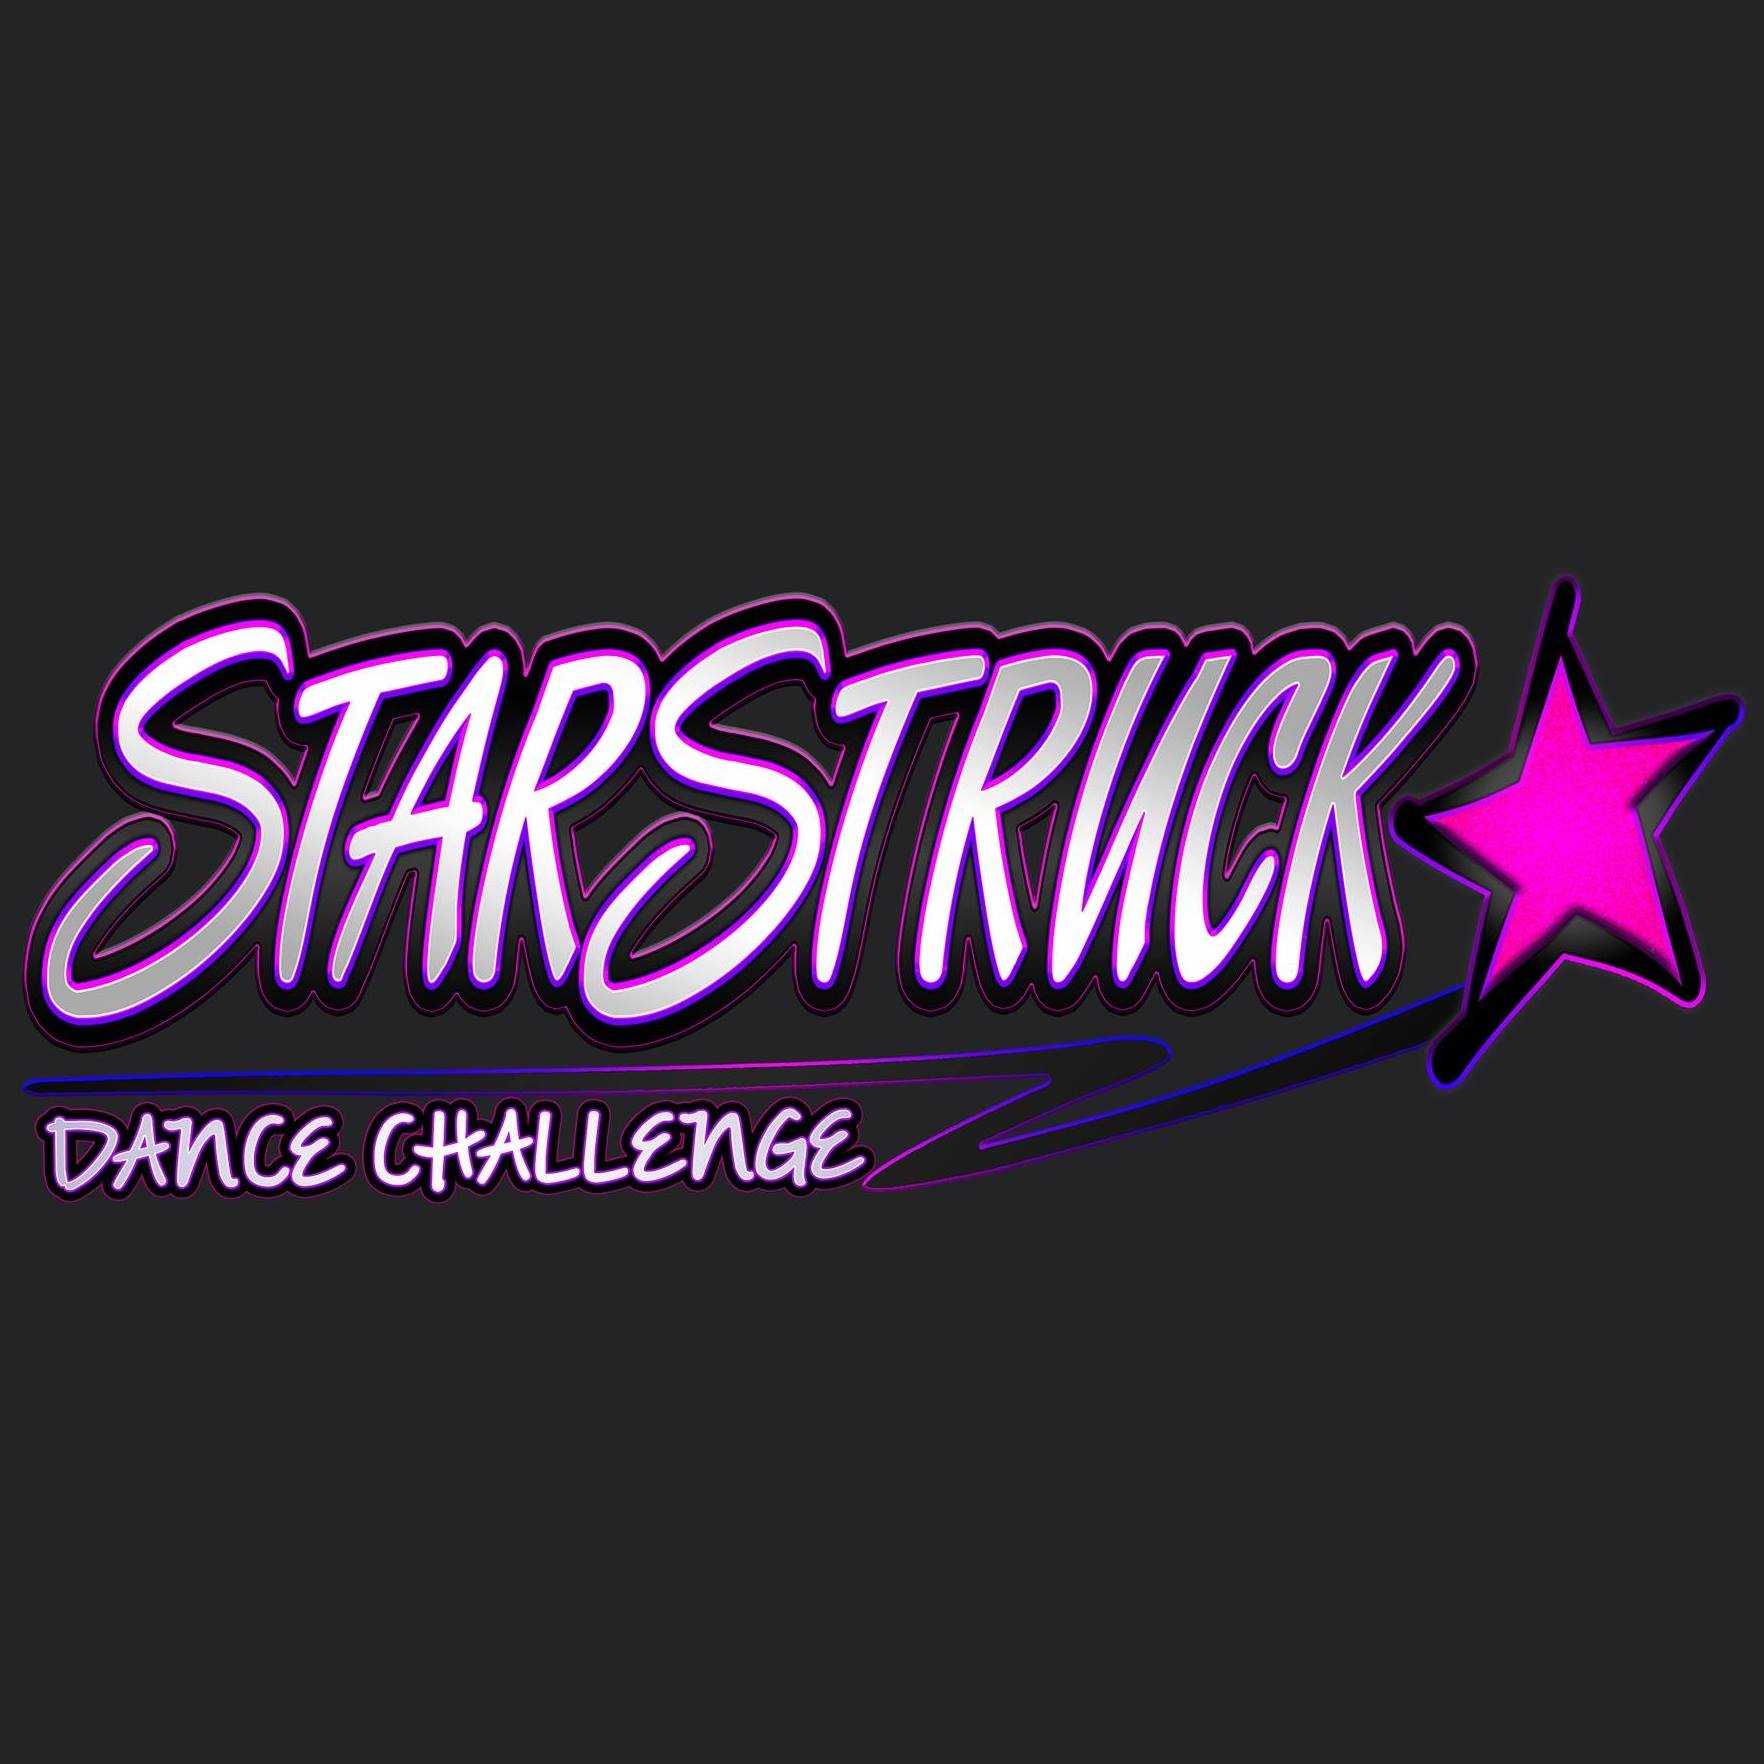 Starstruck Dance Challenge